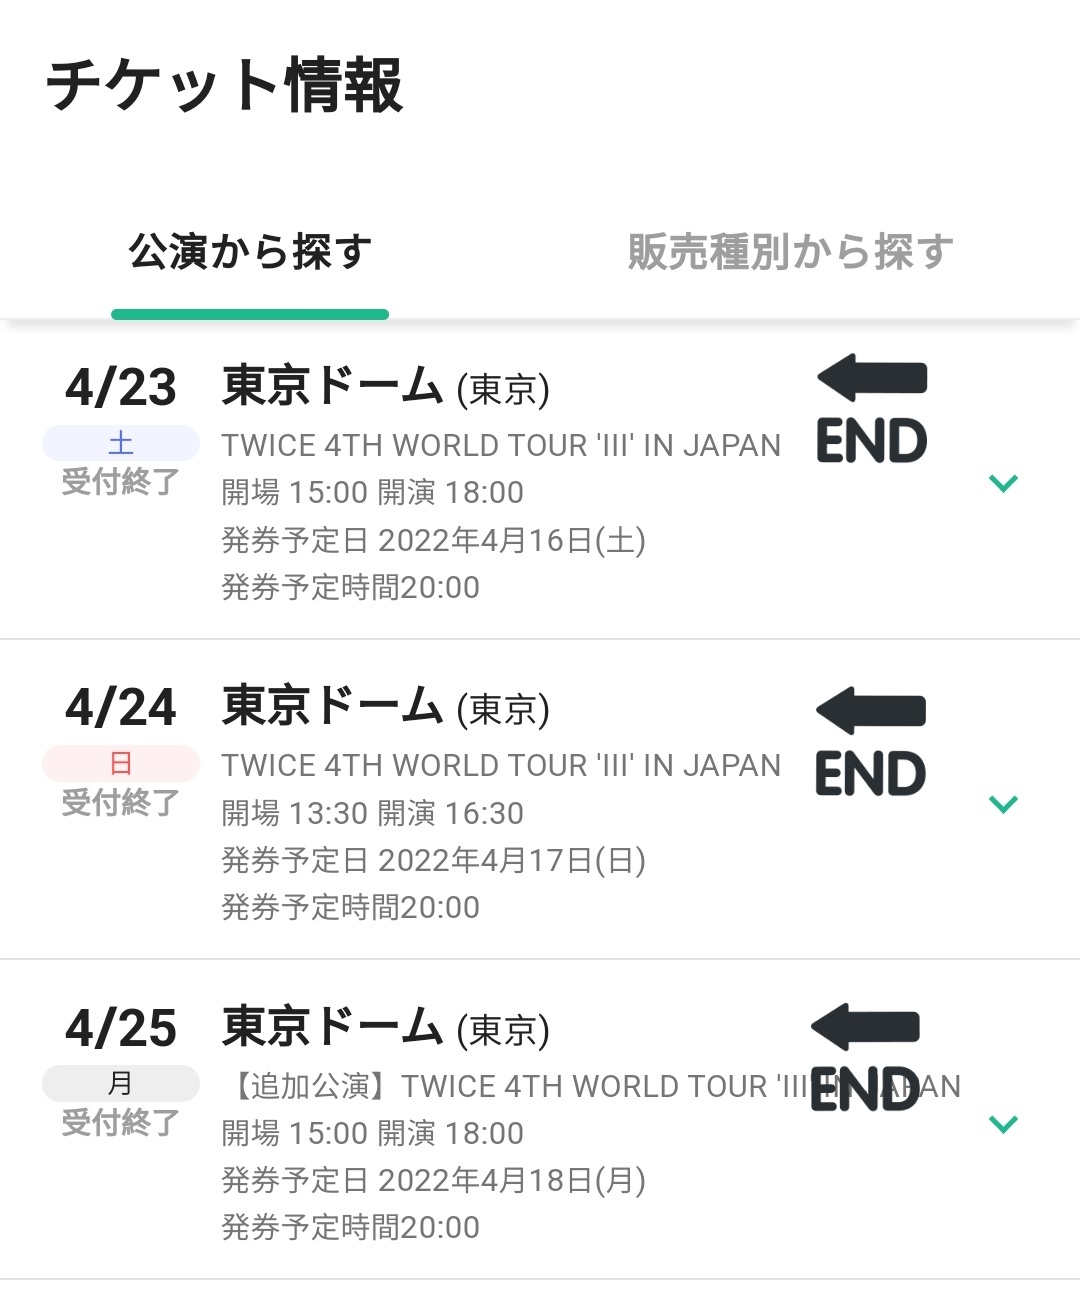 Twice Chart Japan Ticketboard 一般販売 終了 Twice 4th World Tour Iii In Japan ㅡ Ticketboard 一般先着販売 先ほど全3公演ともチケット受付終了 Onceのみなさん 朝から急な発表とチケット争奪戦お疲れさまでした